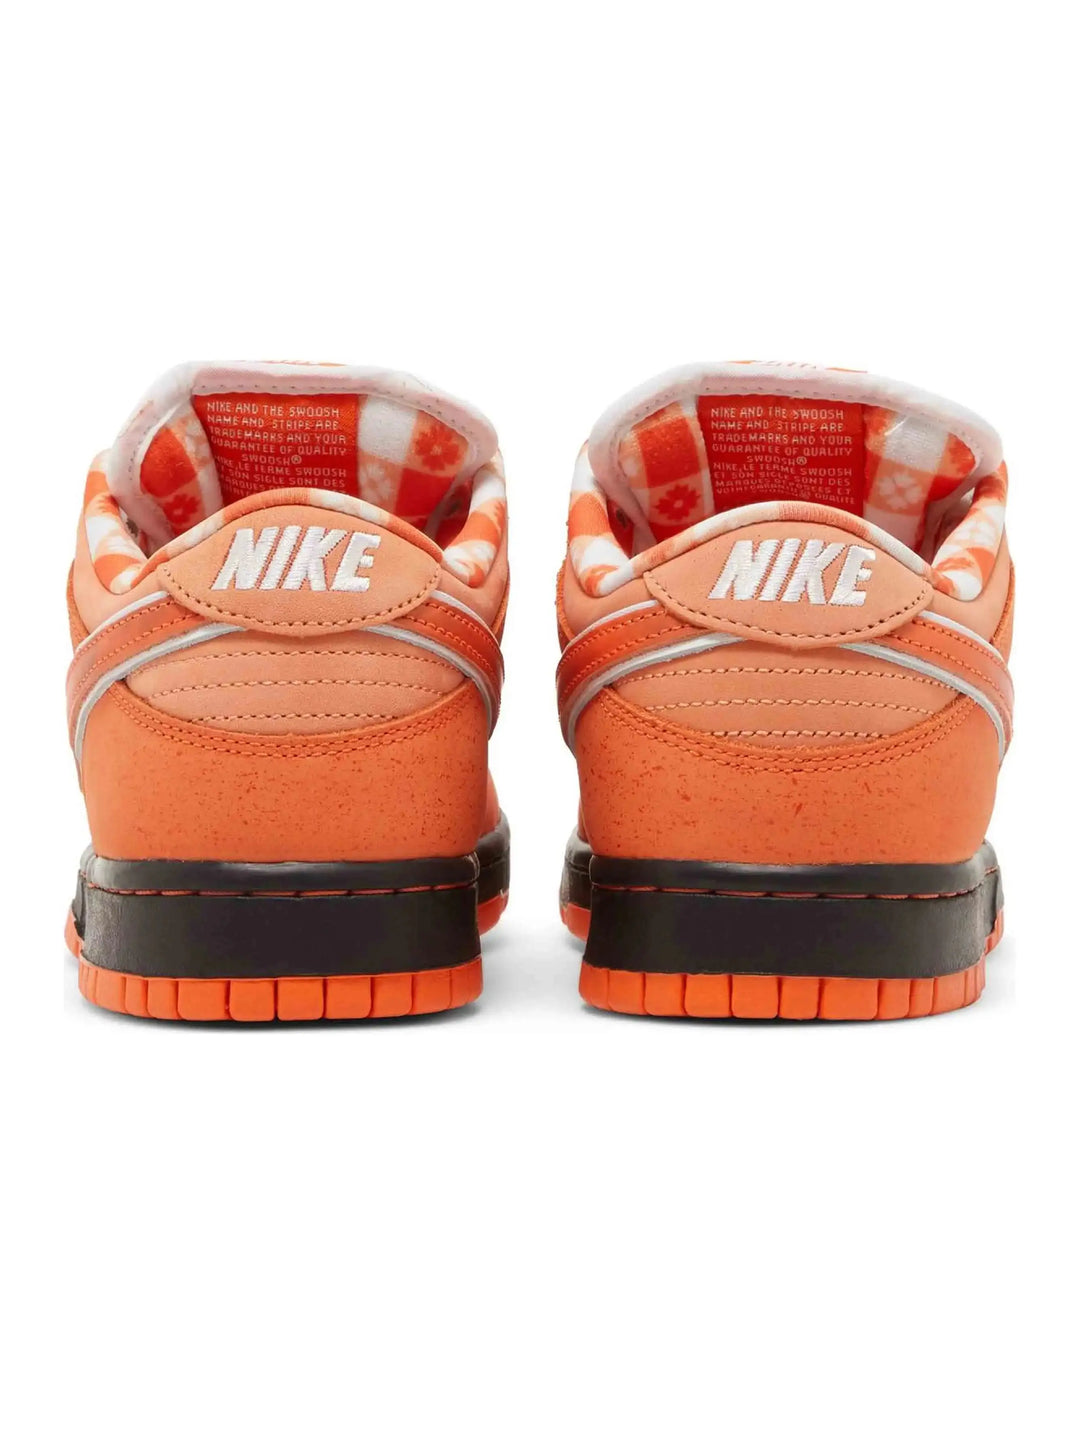 Nike SB Dunk Low Concepts Orange Lobster Prior